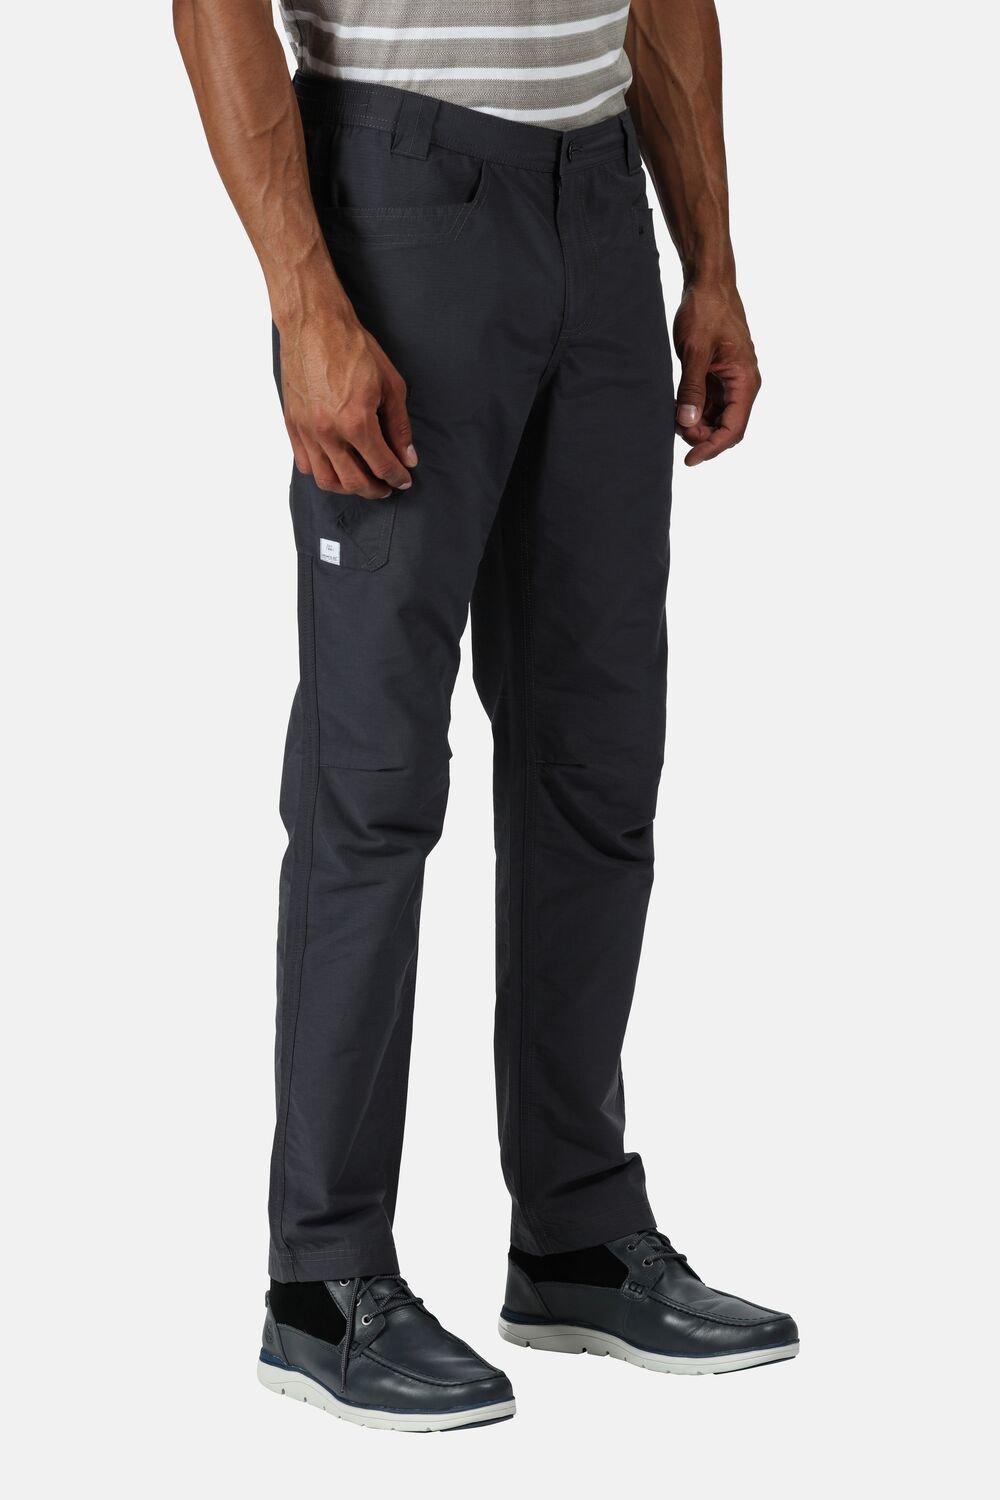 Kalenji Run Dry Women's Running Cropped Trousers - Black (2XS) : Amazon.in:  Clothing & Accessories